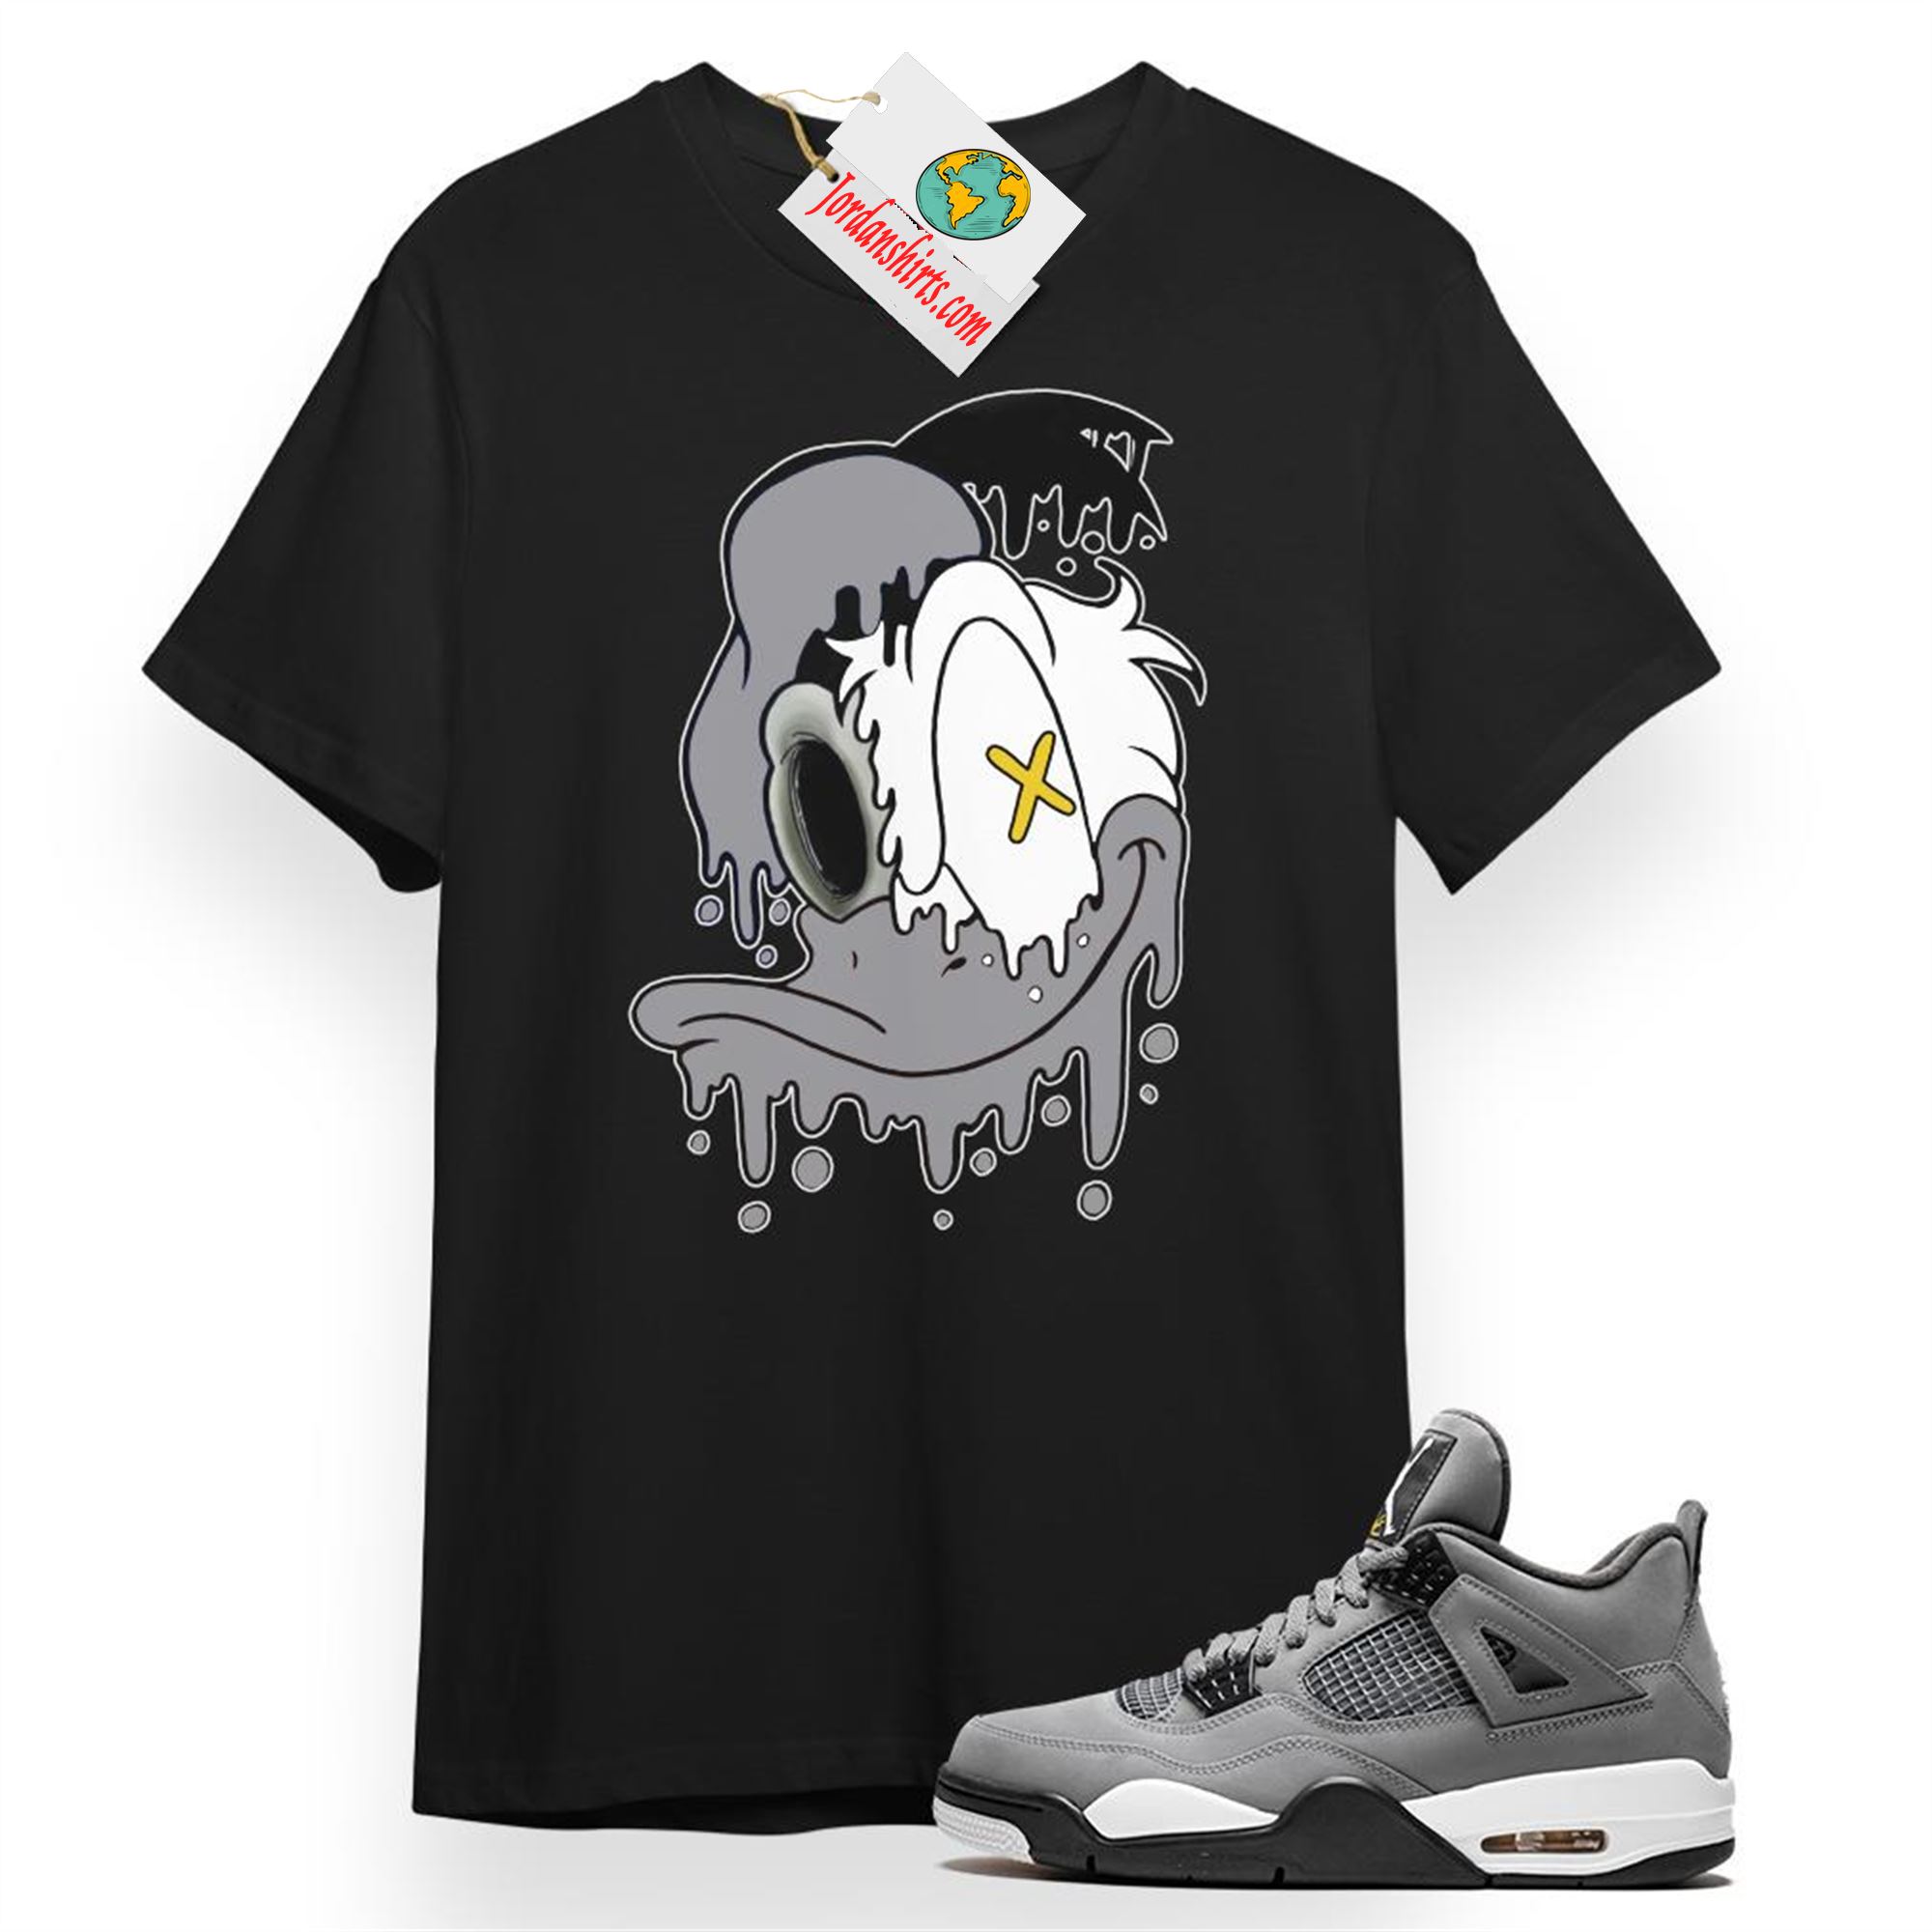 Jordan 4 Shirt, Donald Dripping Black T-shirt Air Jordan 4 Cool Grey 4s Full Size Up To 5xl